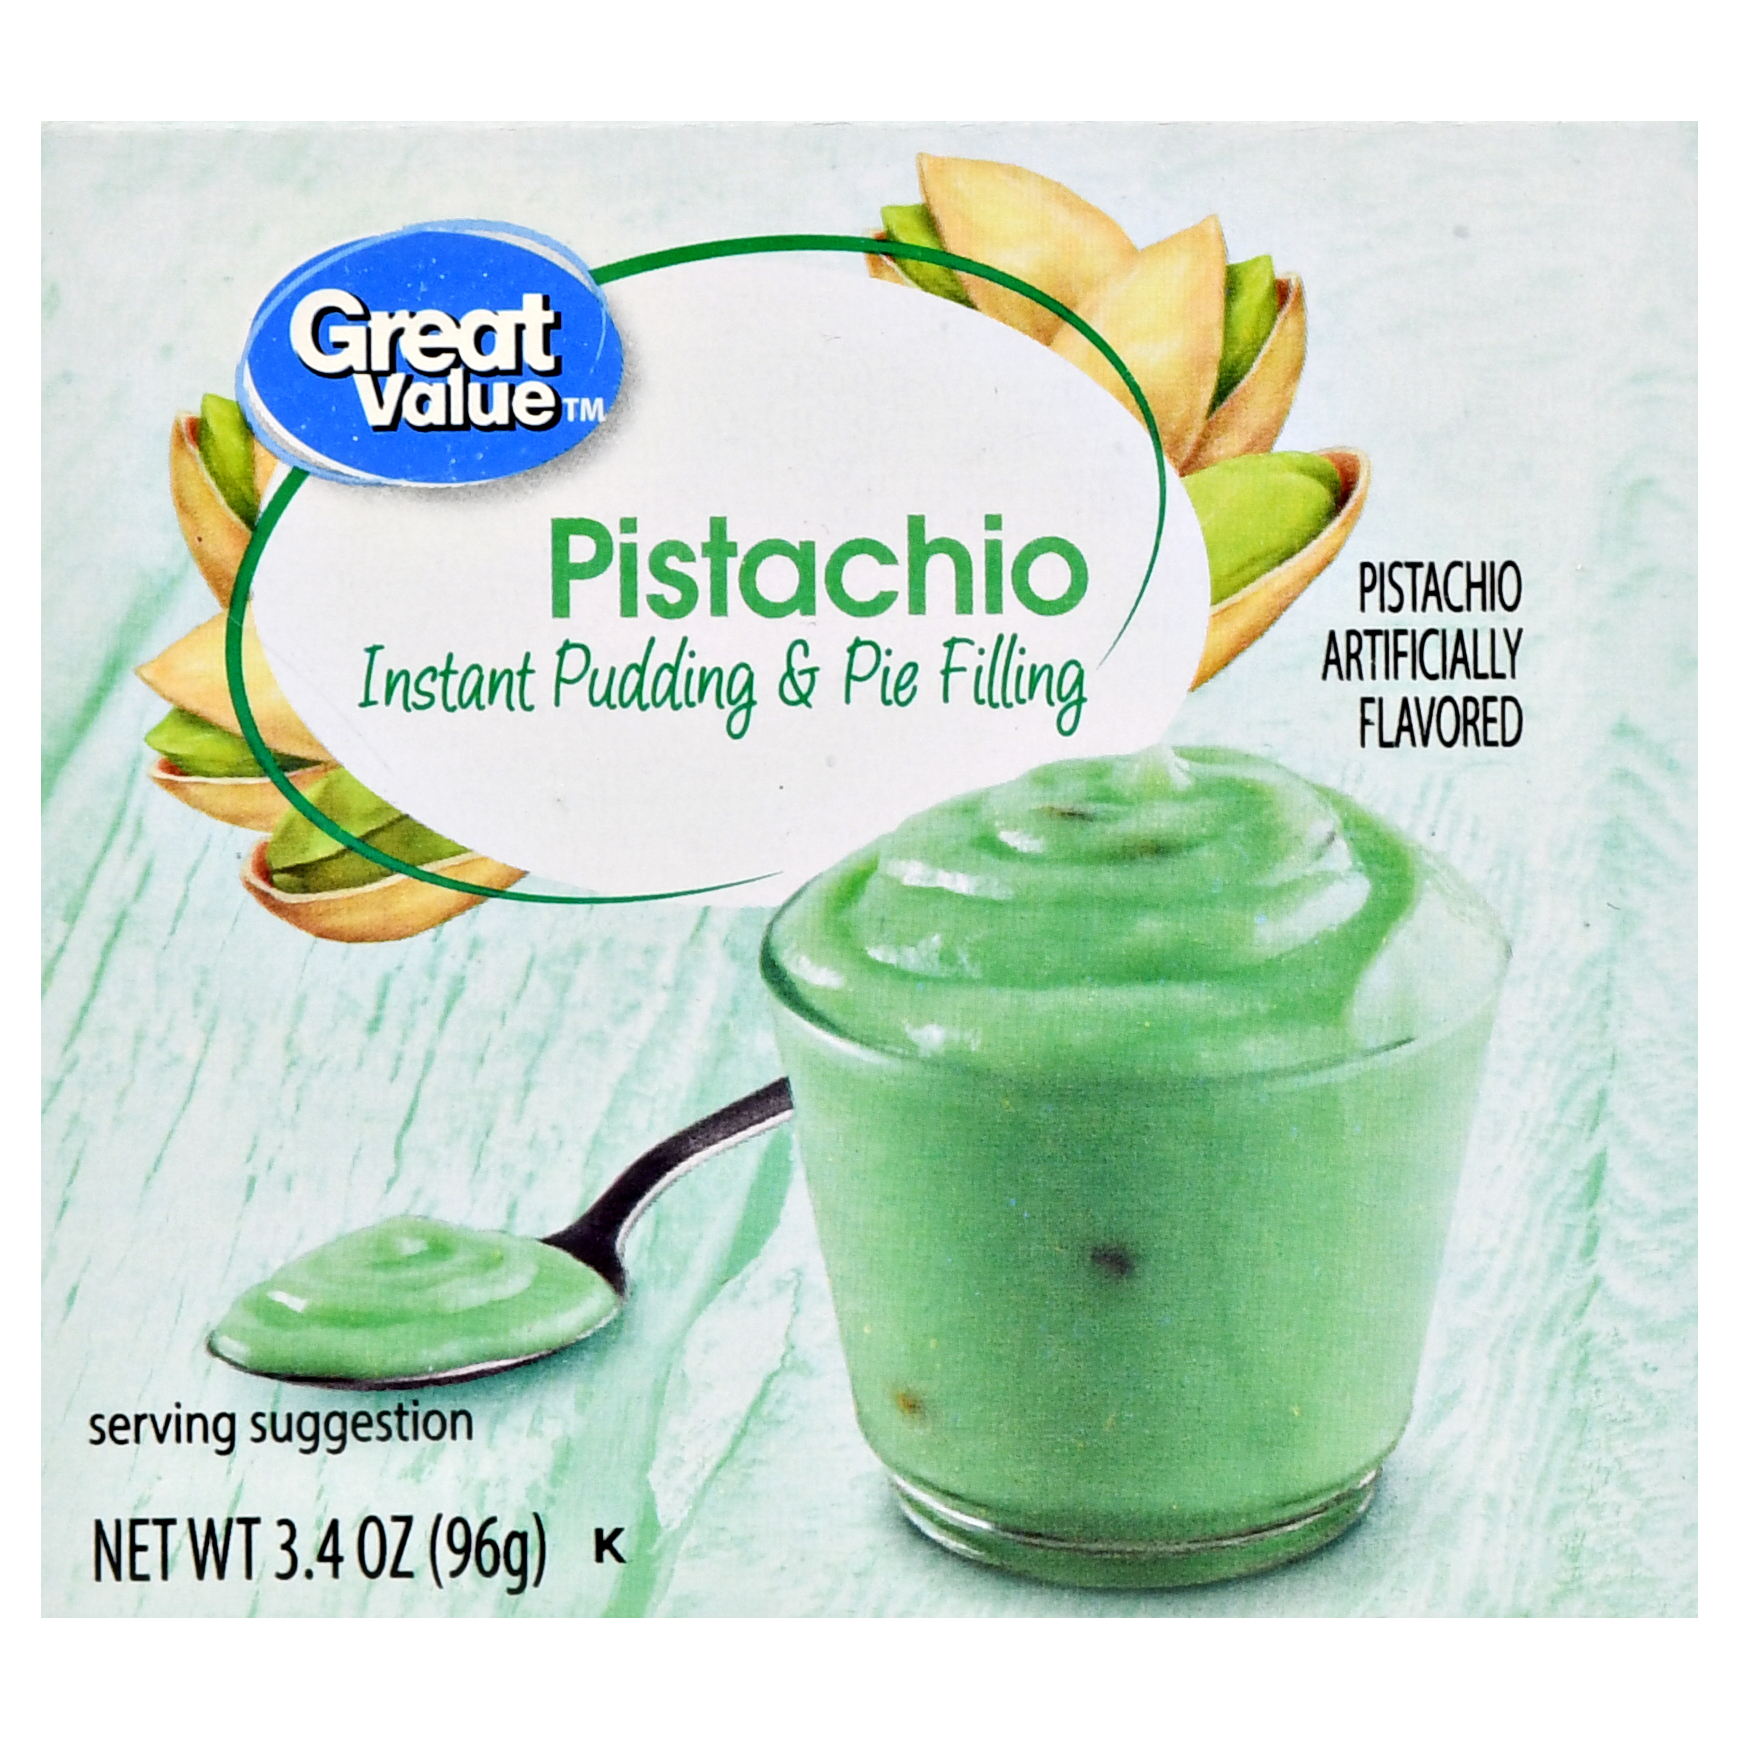 Great Value Pistachio Instant Pudding & Pie Filling, 3.4 Oz Image